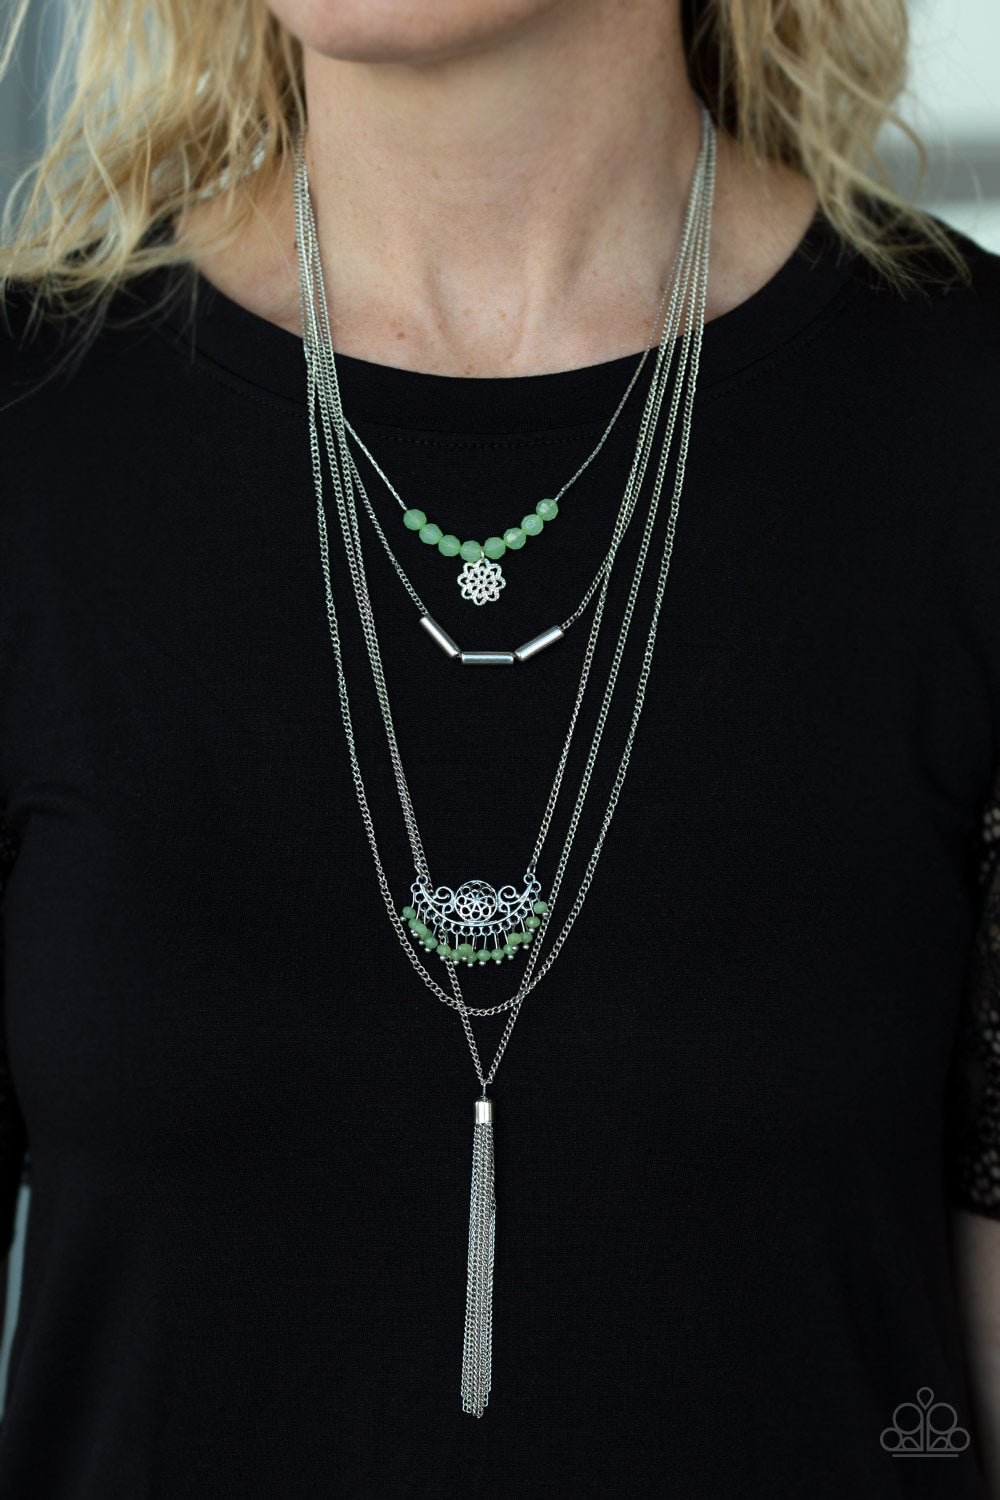 Paparazzi Malibu Mixer - Green Beads - Silver Necklace and matching Earrings - $5 Jewelry With Ashley Swint